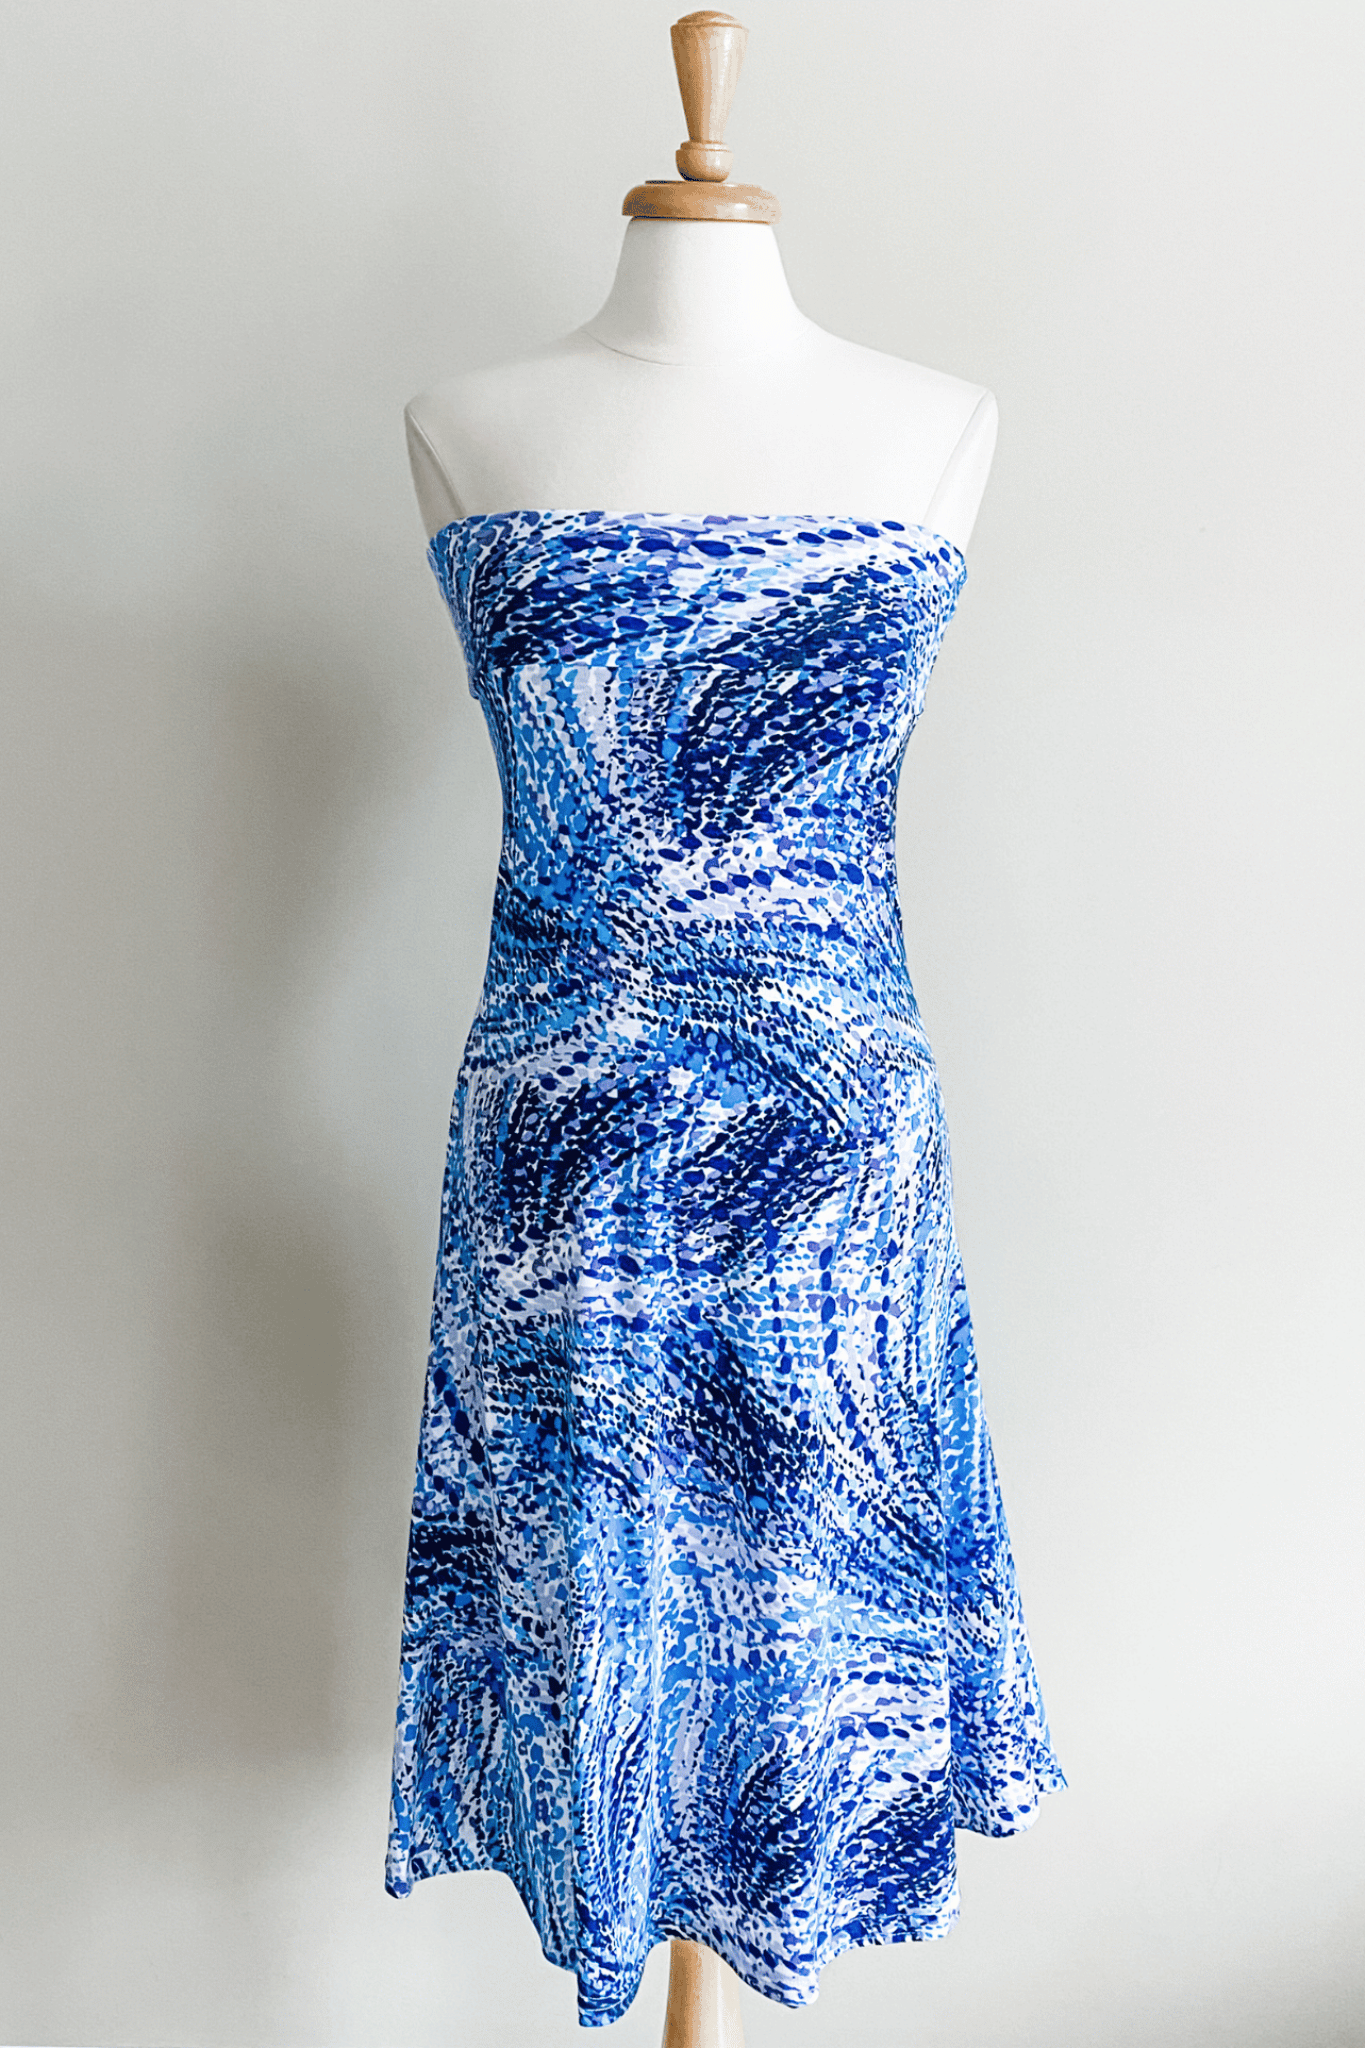 Wear-Ever Multiway Dress in Prints (Warm Weather Capsule)